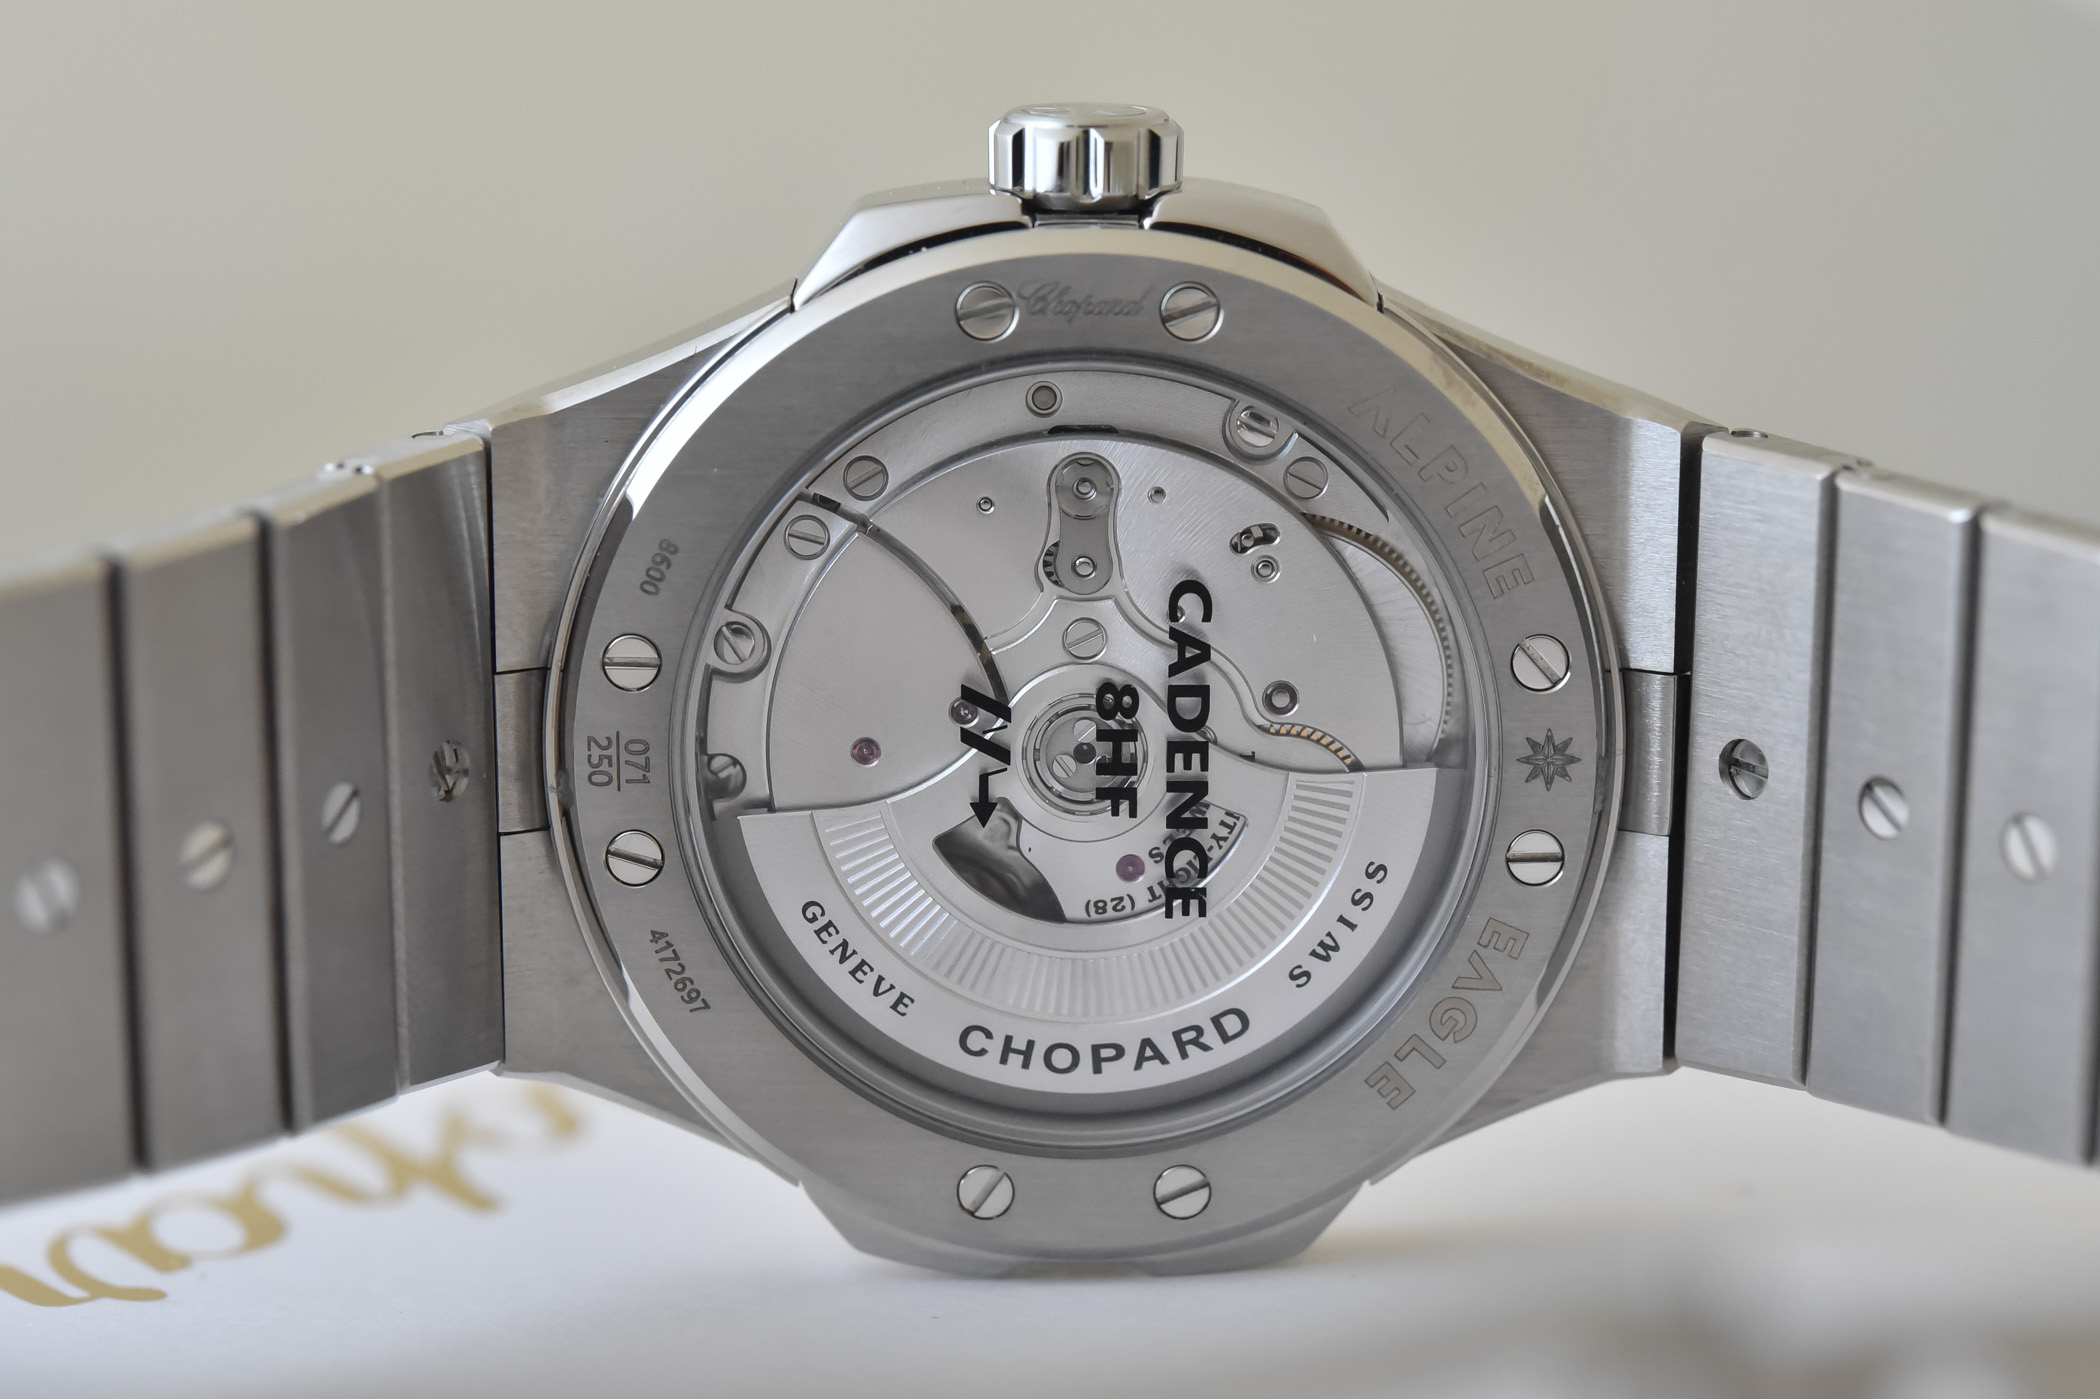 Chopard Alpine Eagle Cadence 8HF Titanium Limited Edition